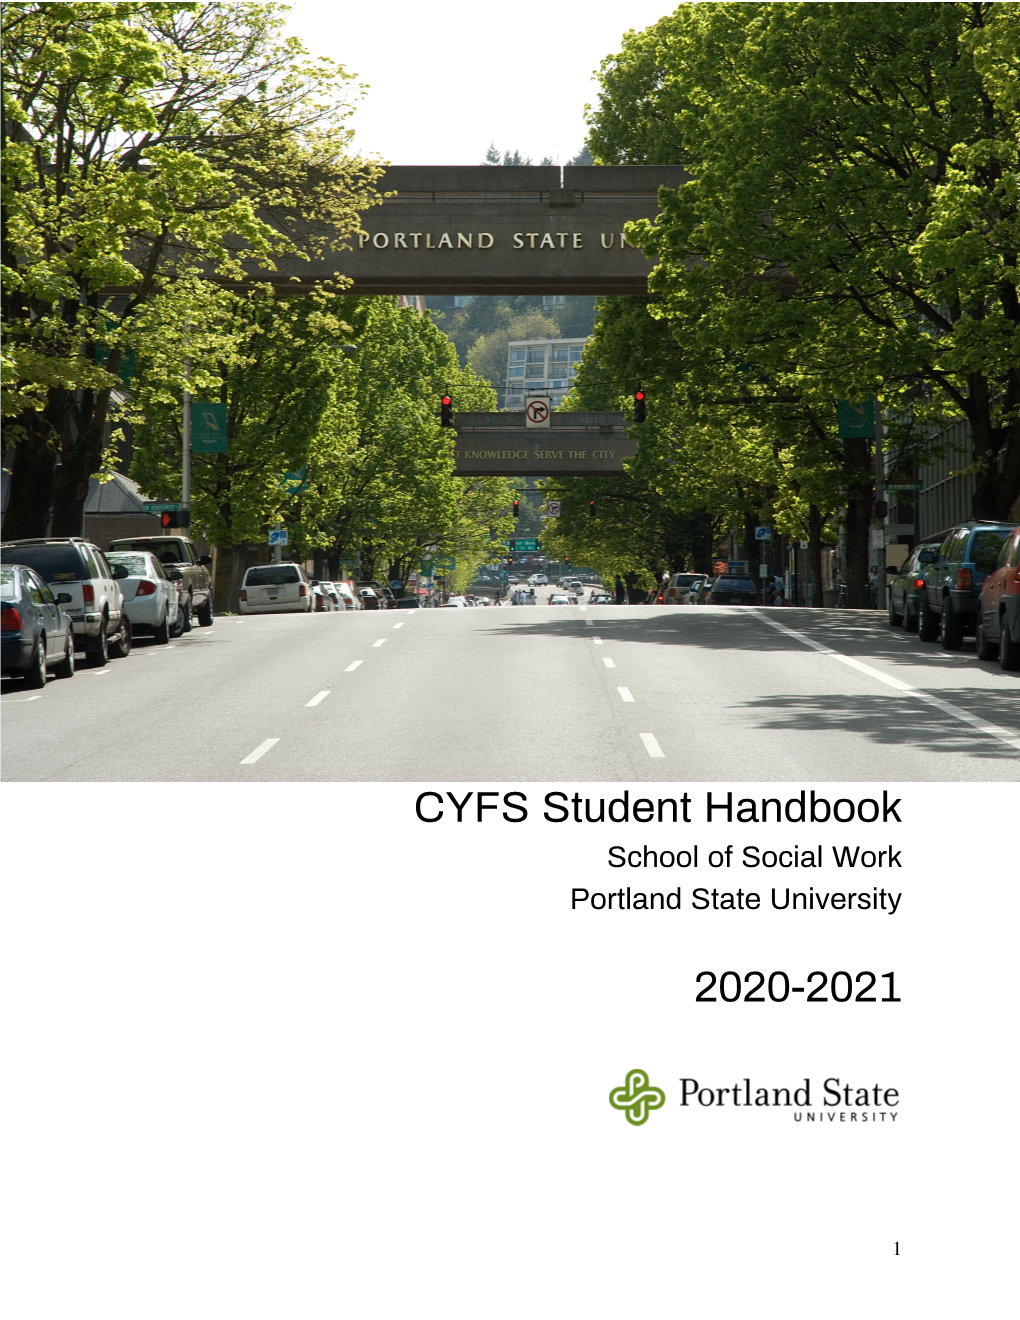 CYFS Program Handbook 2020-2021